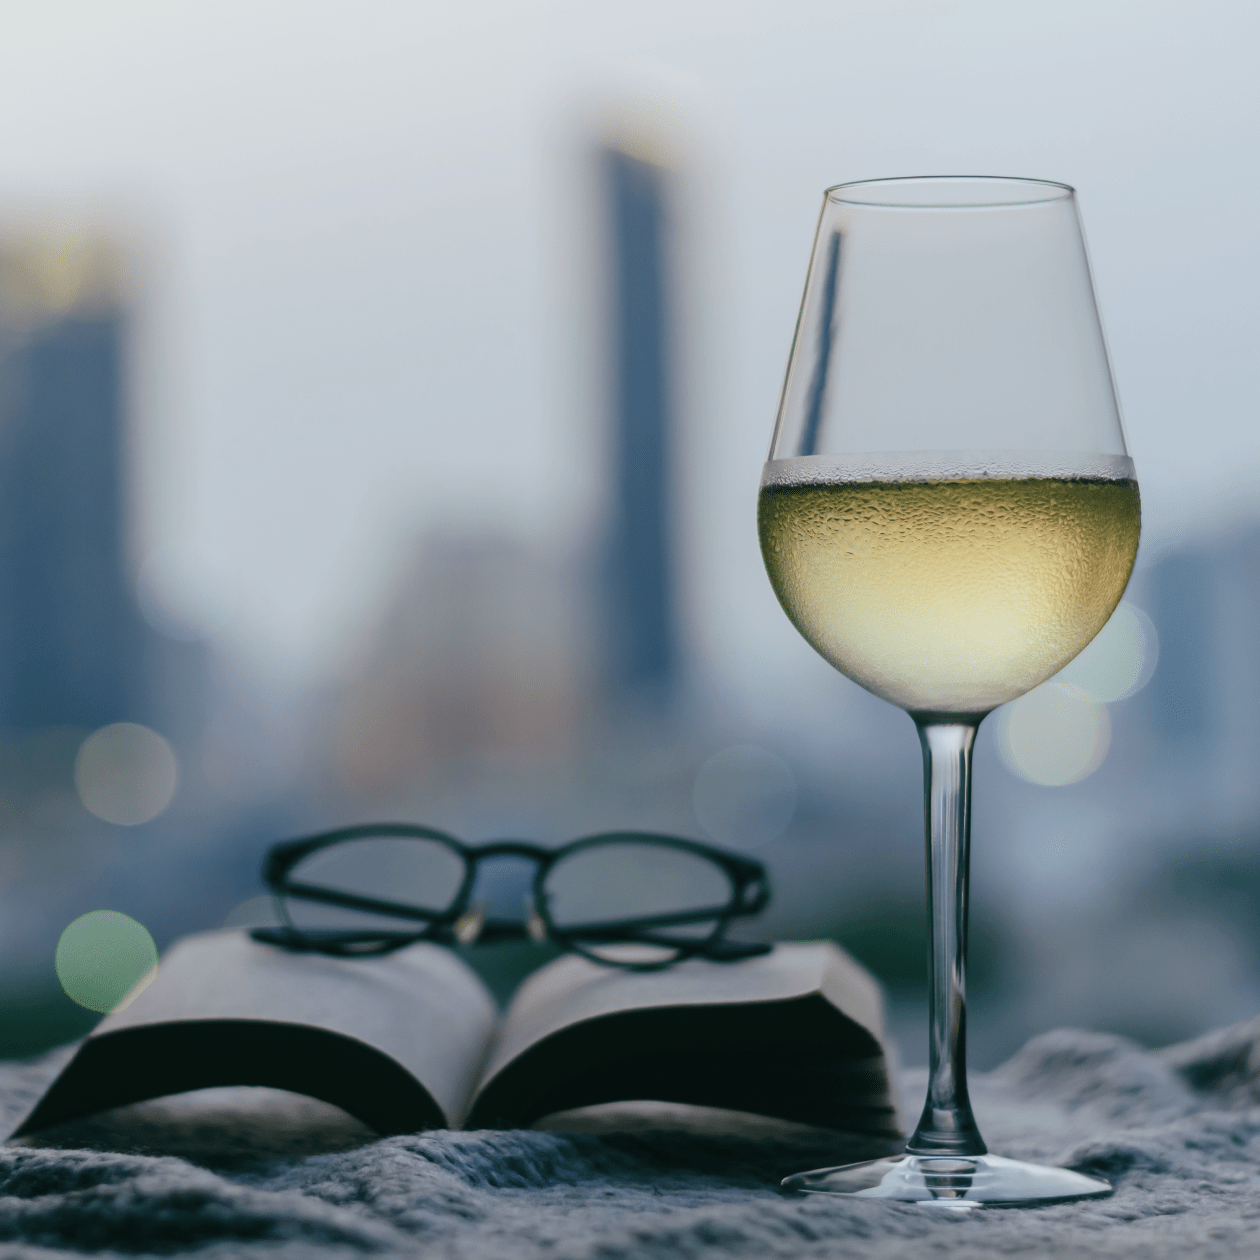 Book, glasses, white wine | DRINKS